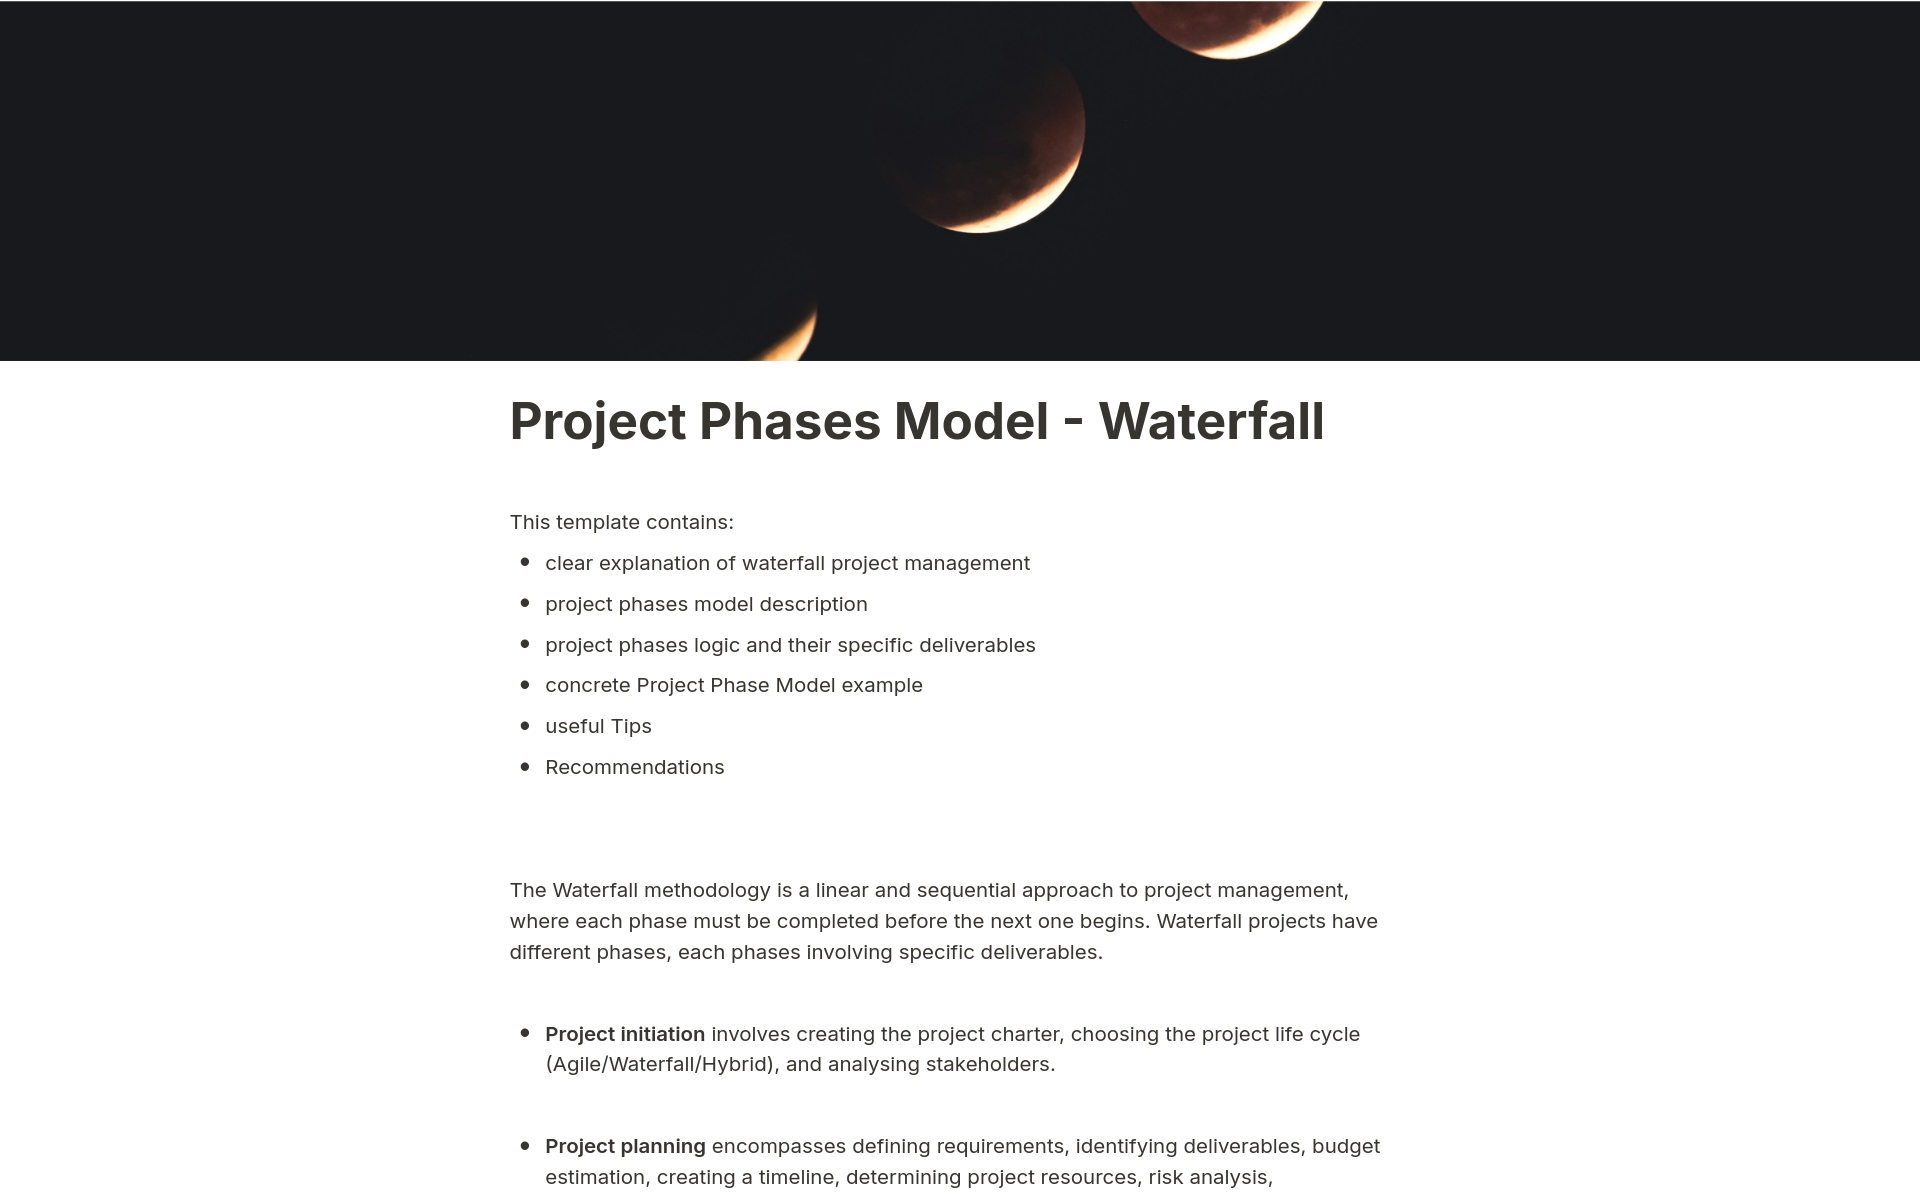 Aperçu du modèle de Project Phases Model - Waterfall